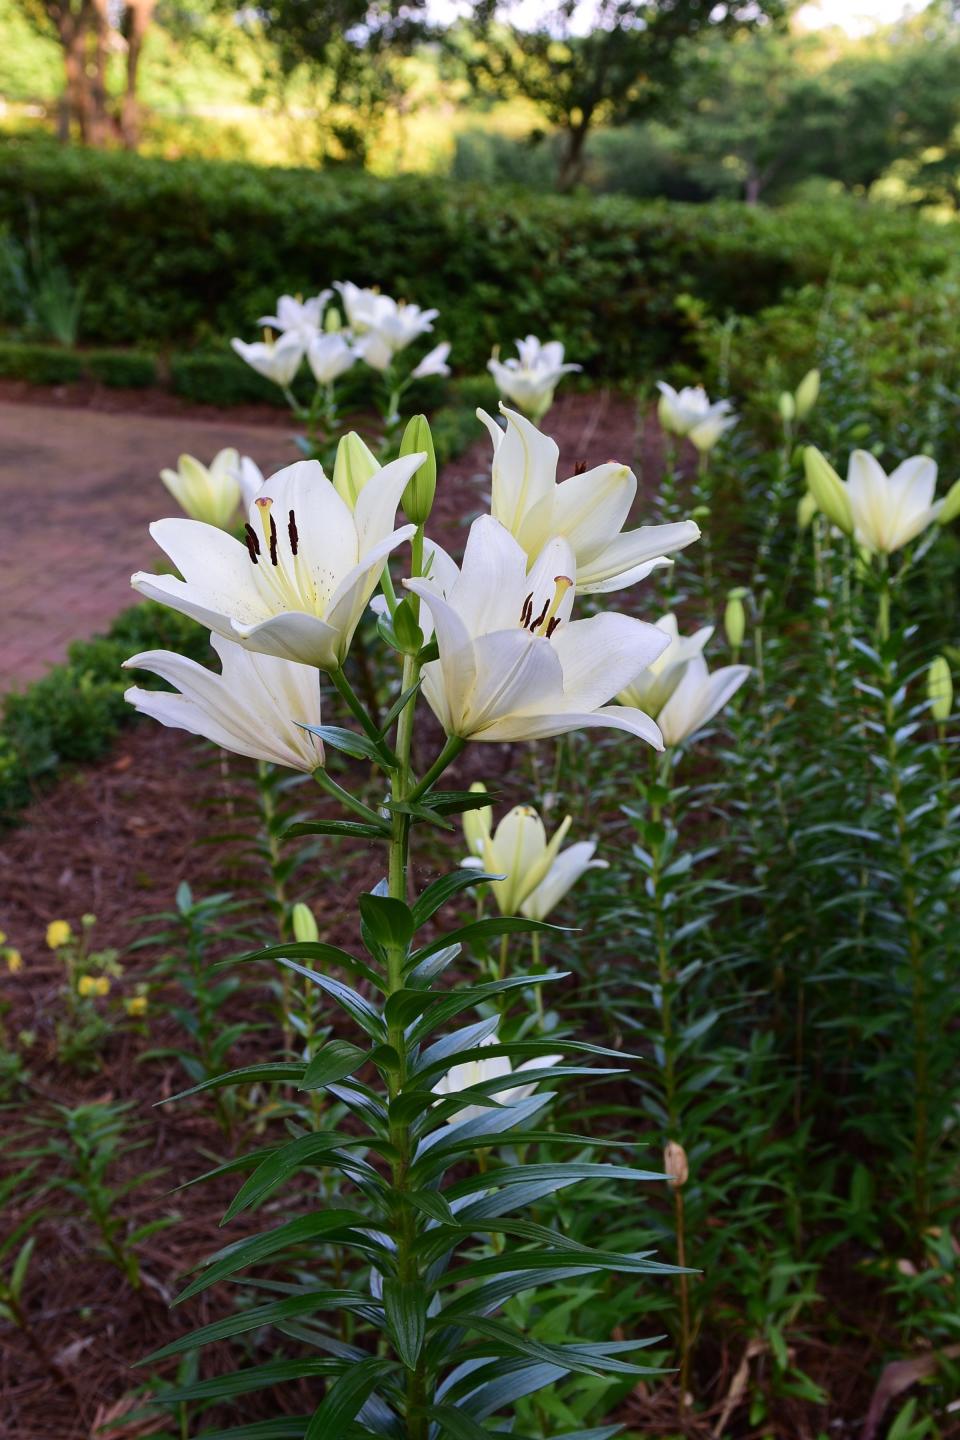 Asiatic lilies turn upward as the open.